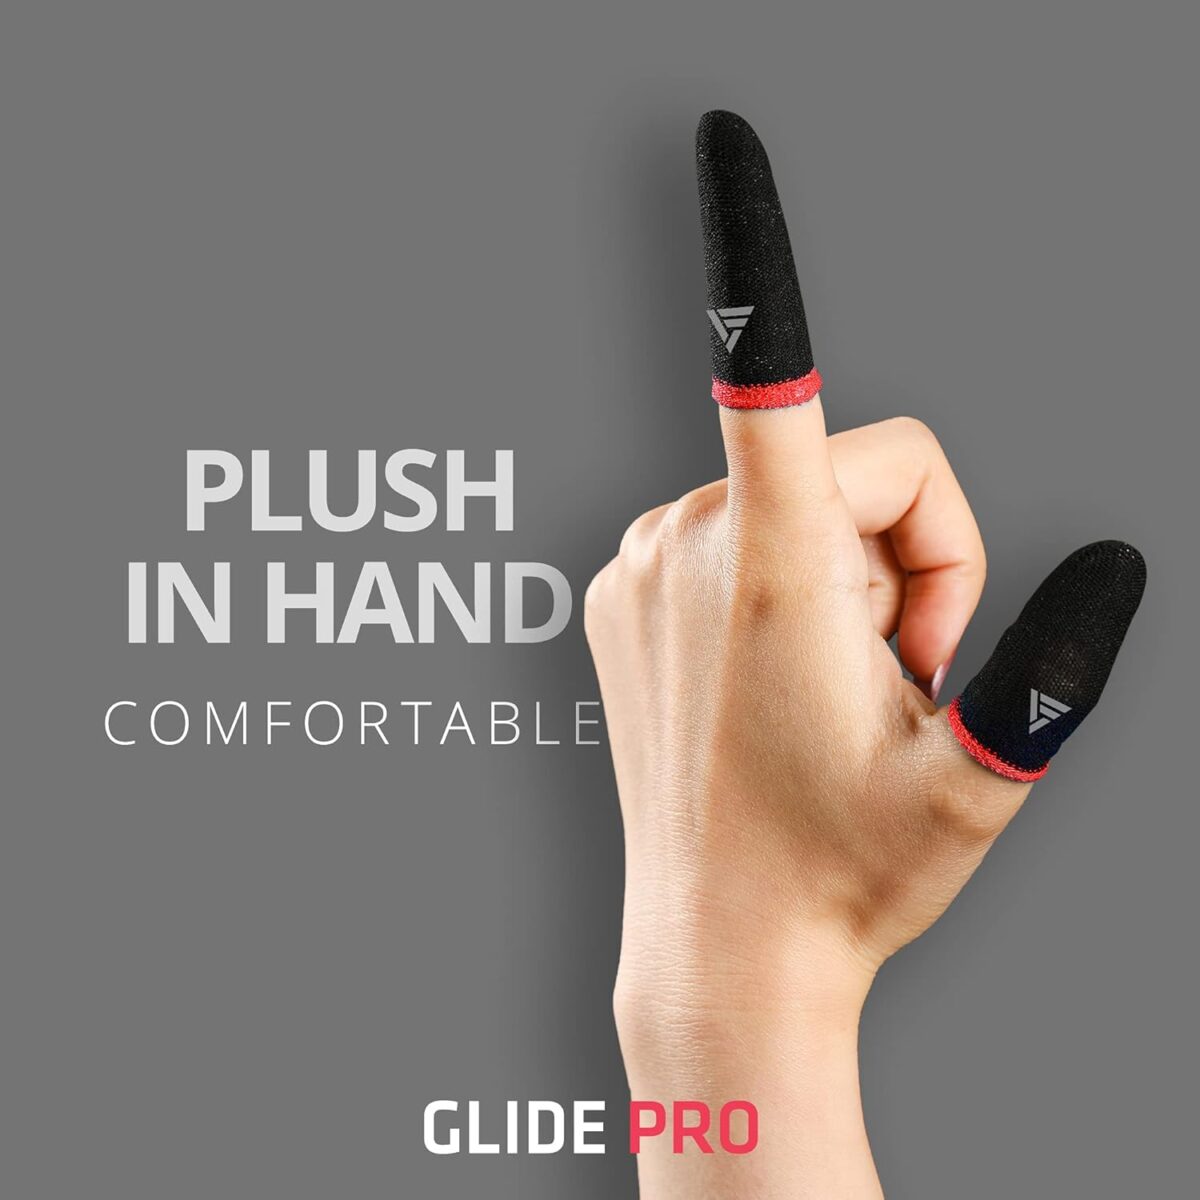 Vero Forza Glide PRO Finger Sleeve for Mobile Game, Pubg,Cod,Freefire & Fortnite